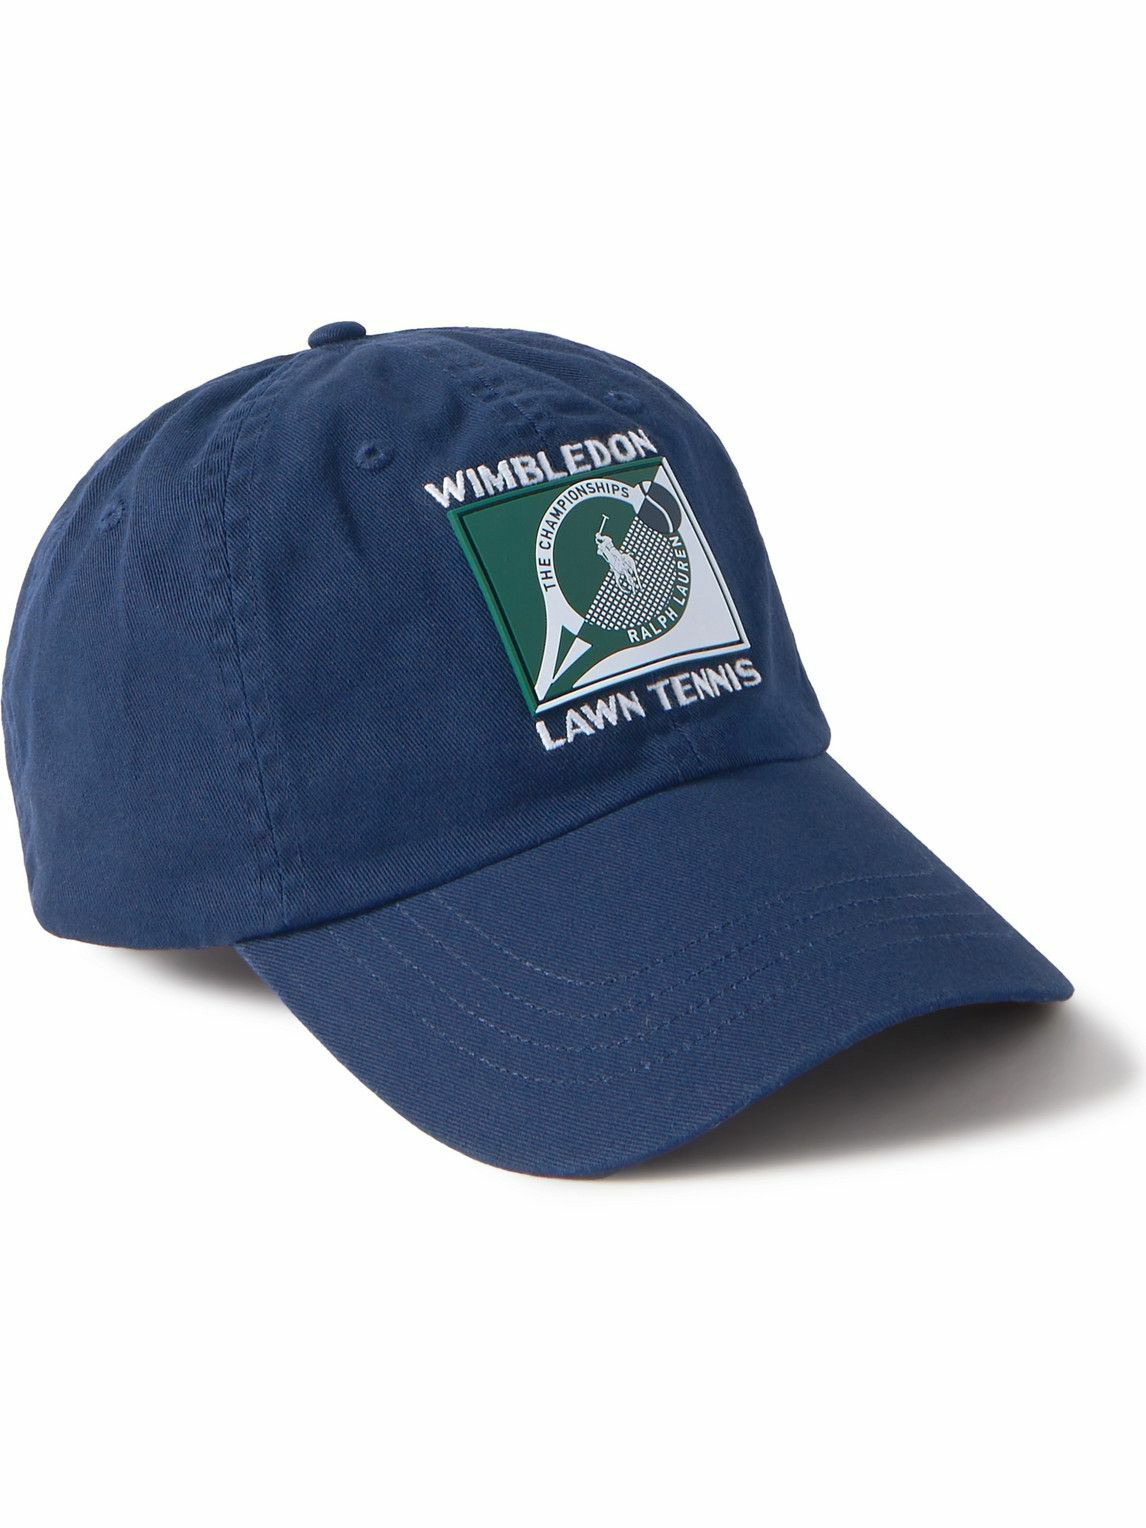 NEW The Championships Wimbledon Baseball Cap for Men cotton Hats